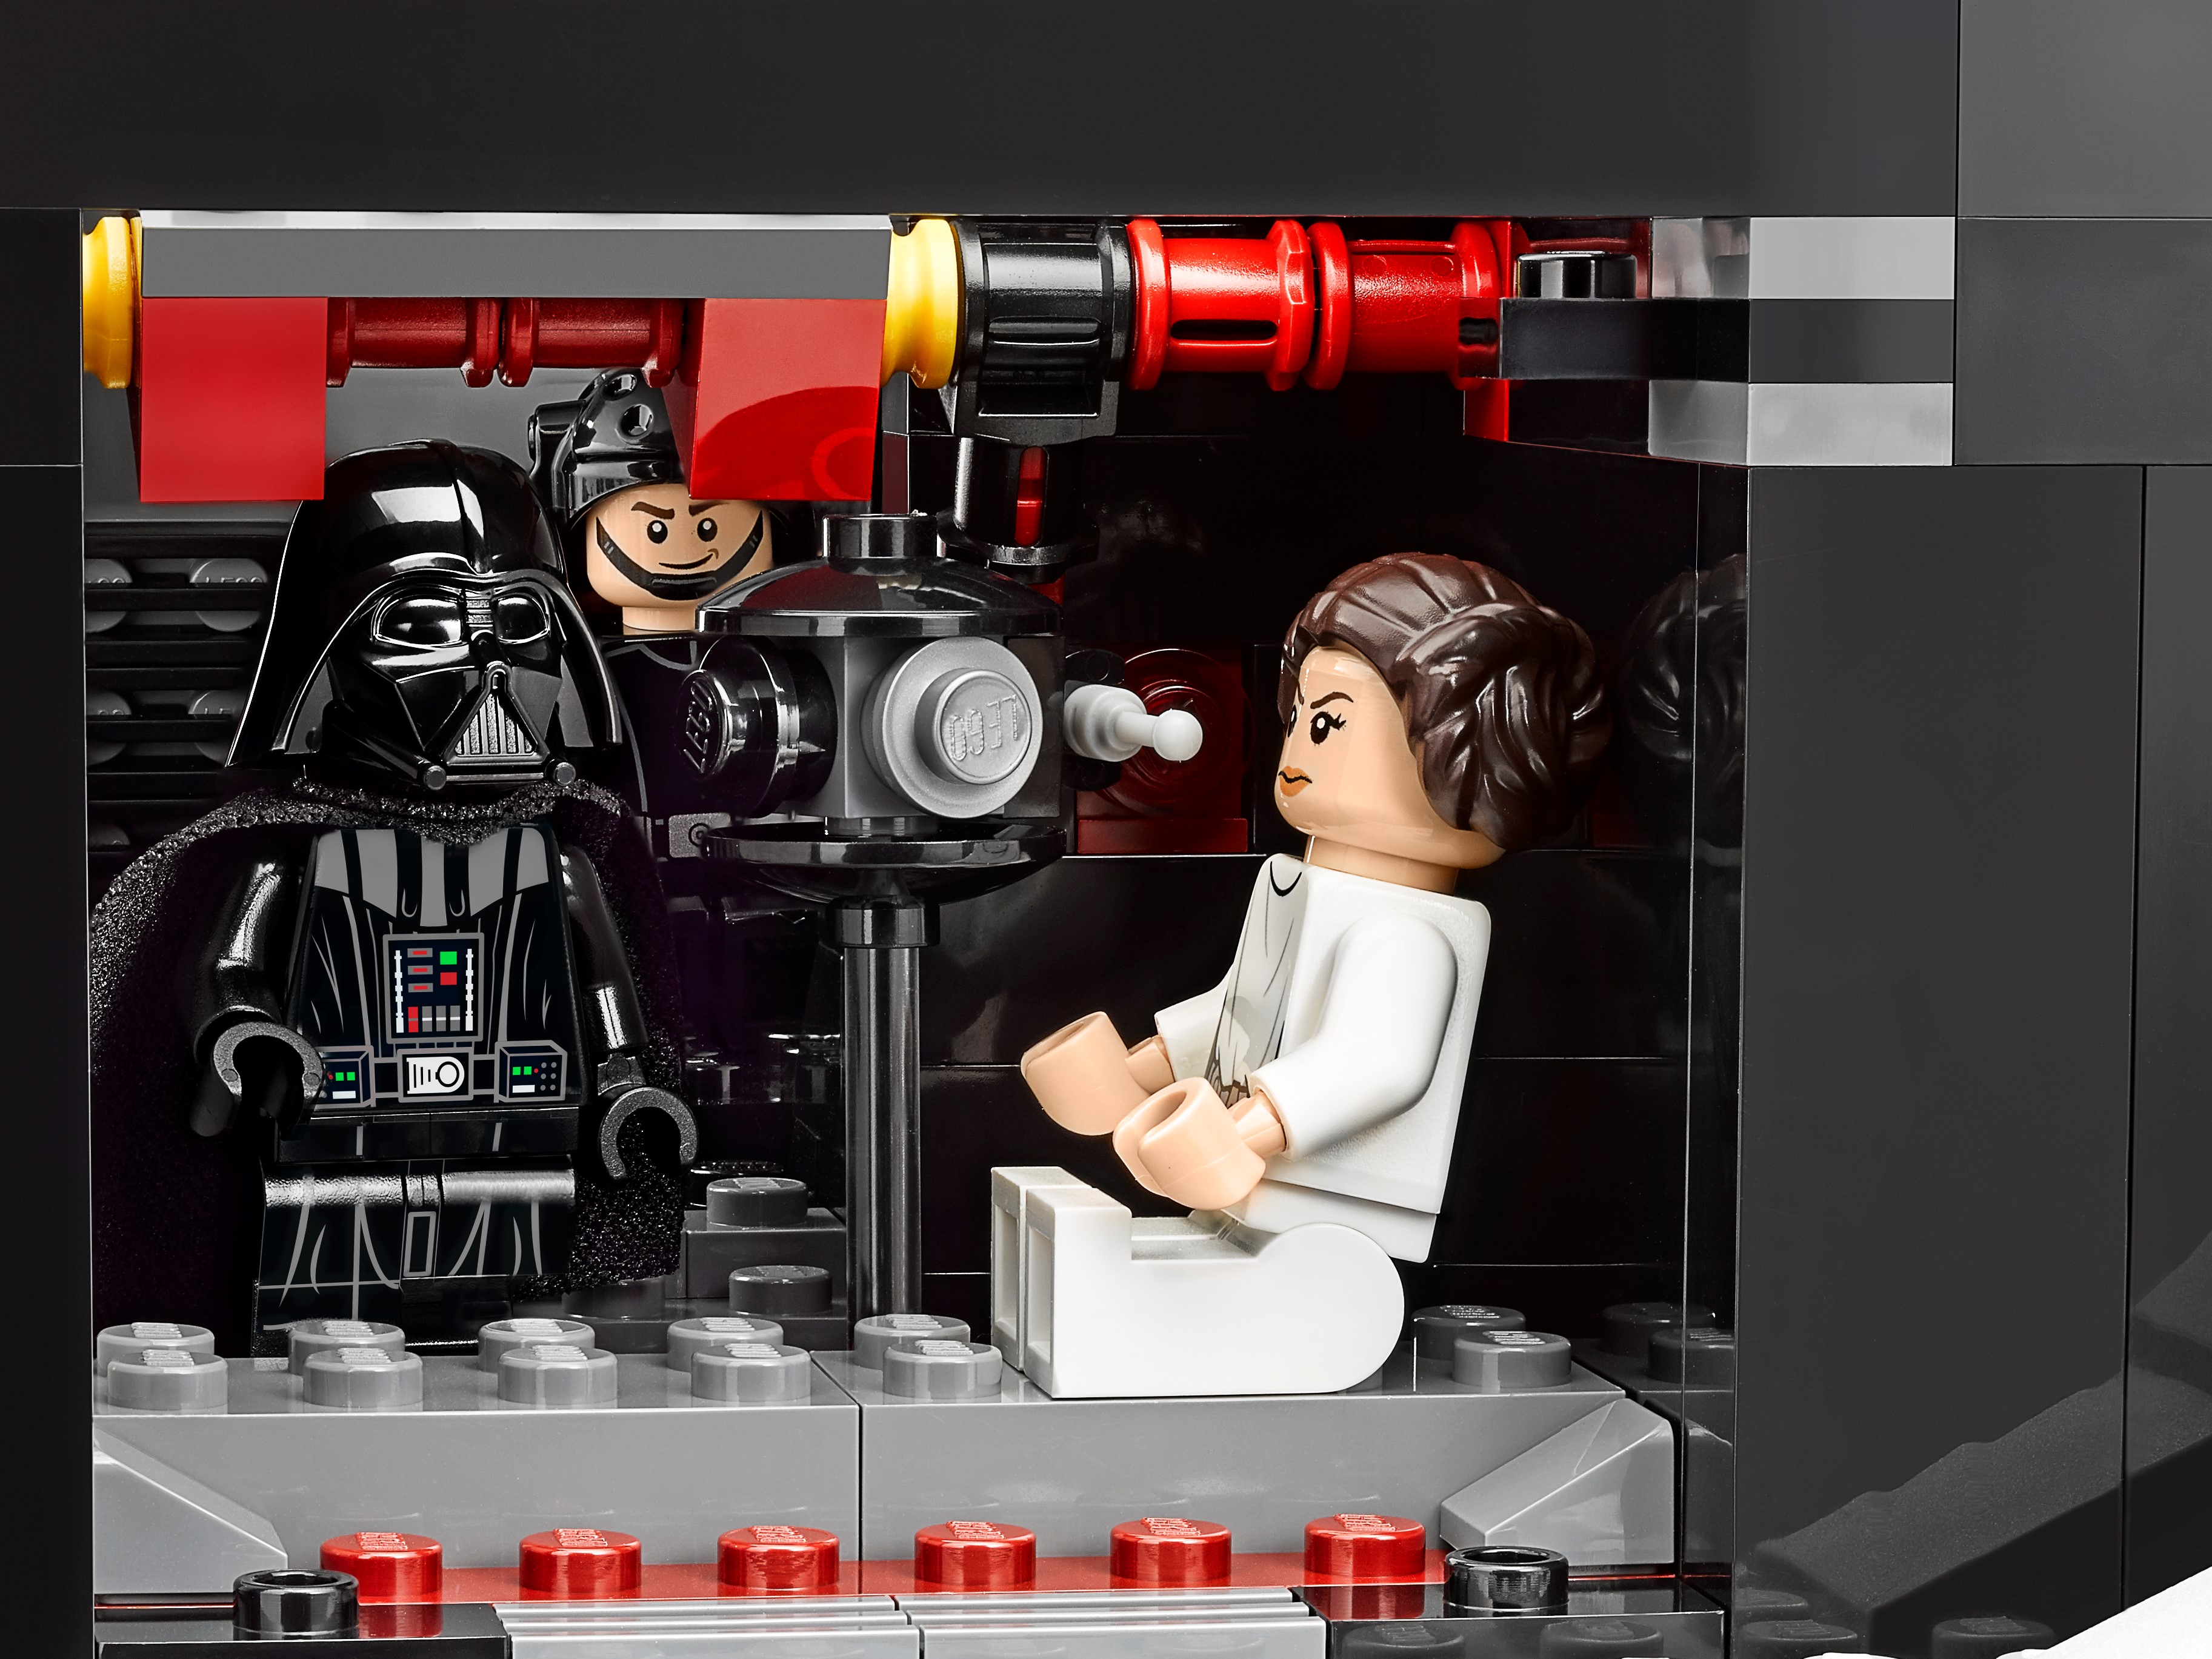 Lego Star Wars Death Star Han Solo Minifigure 75159